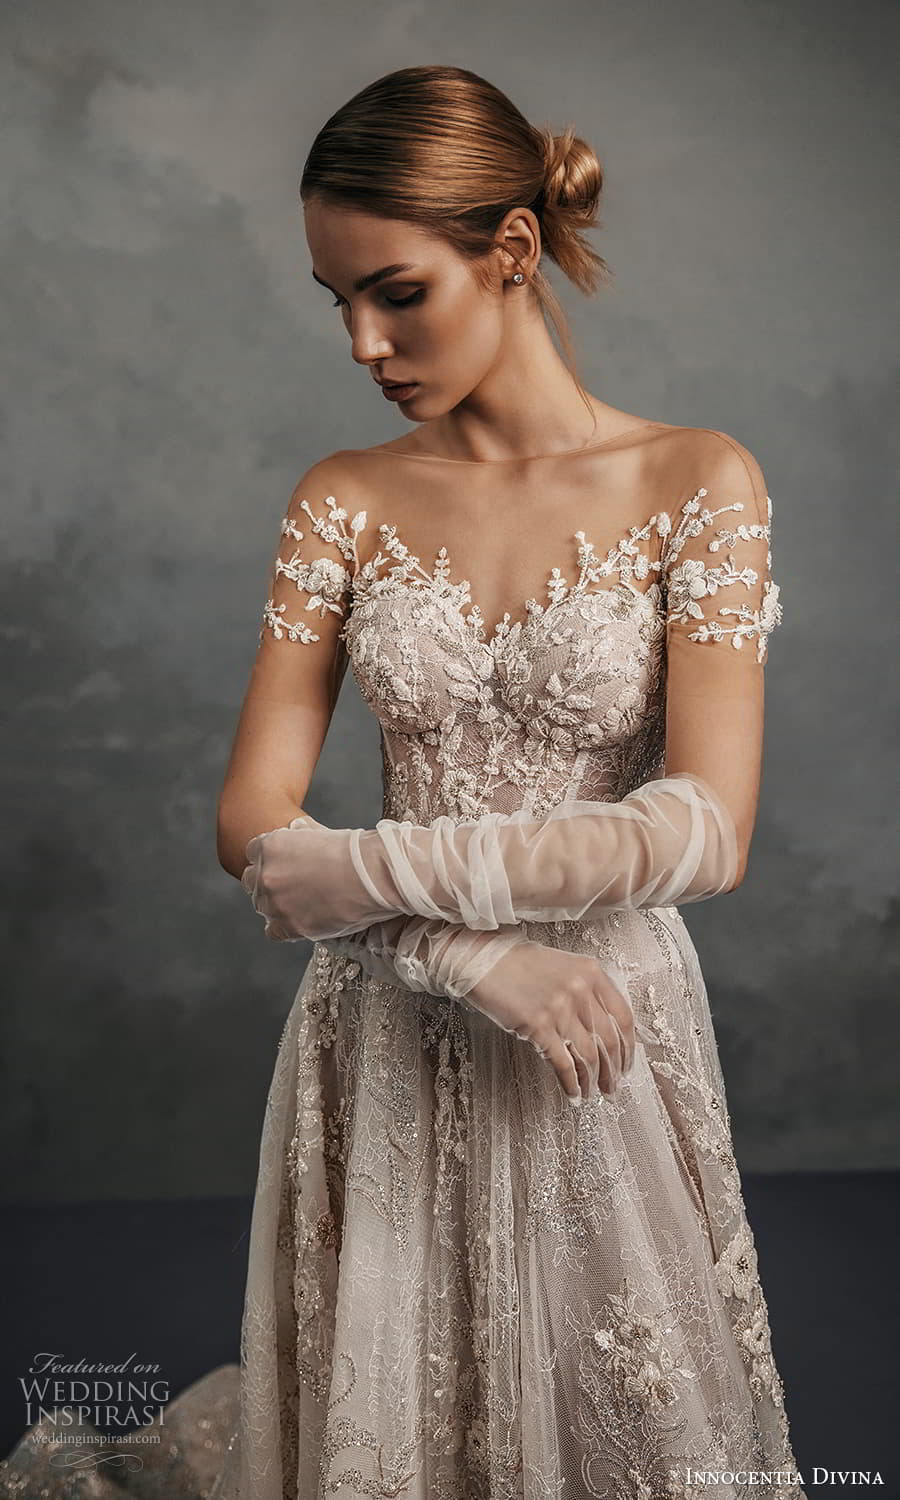 Innocentia divina wedding dress